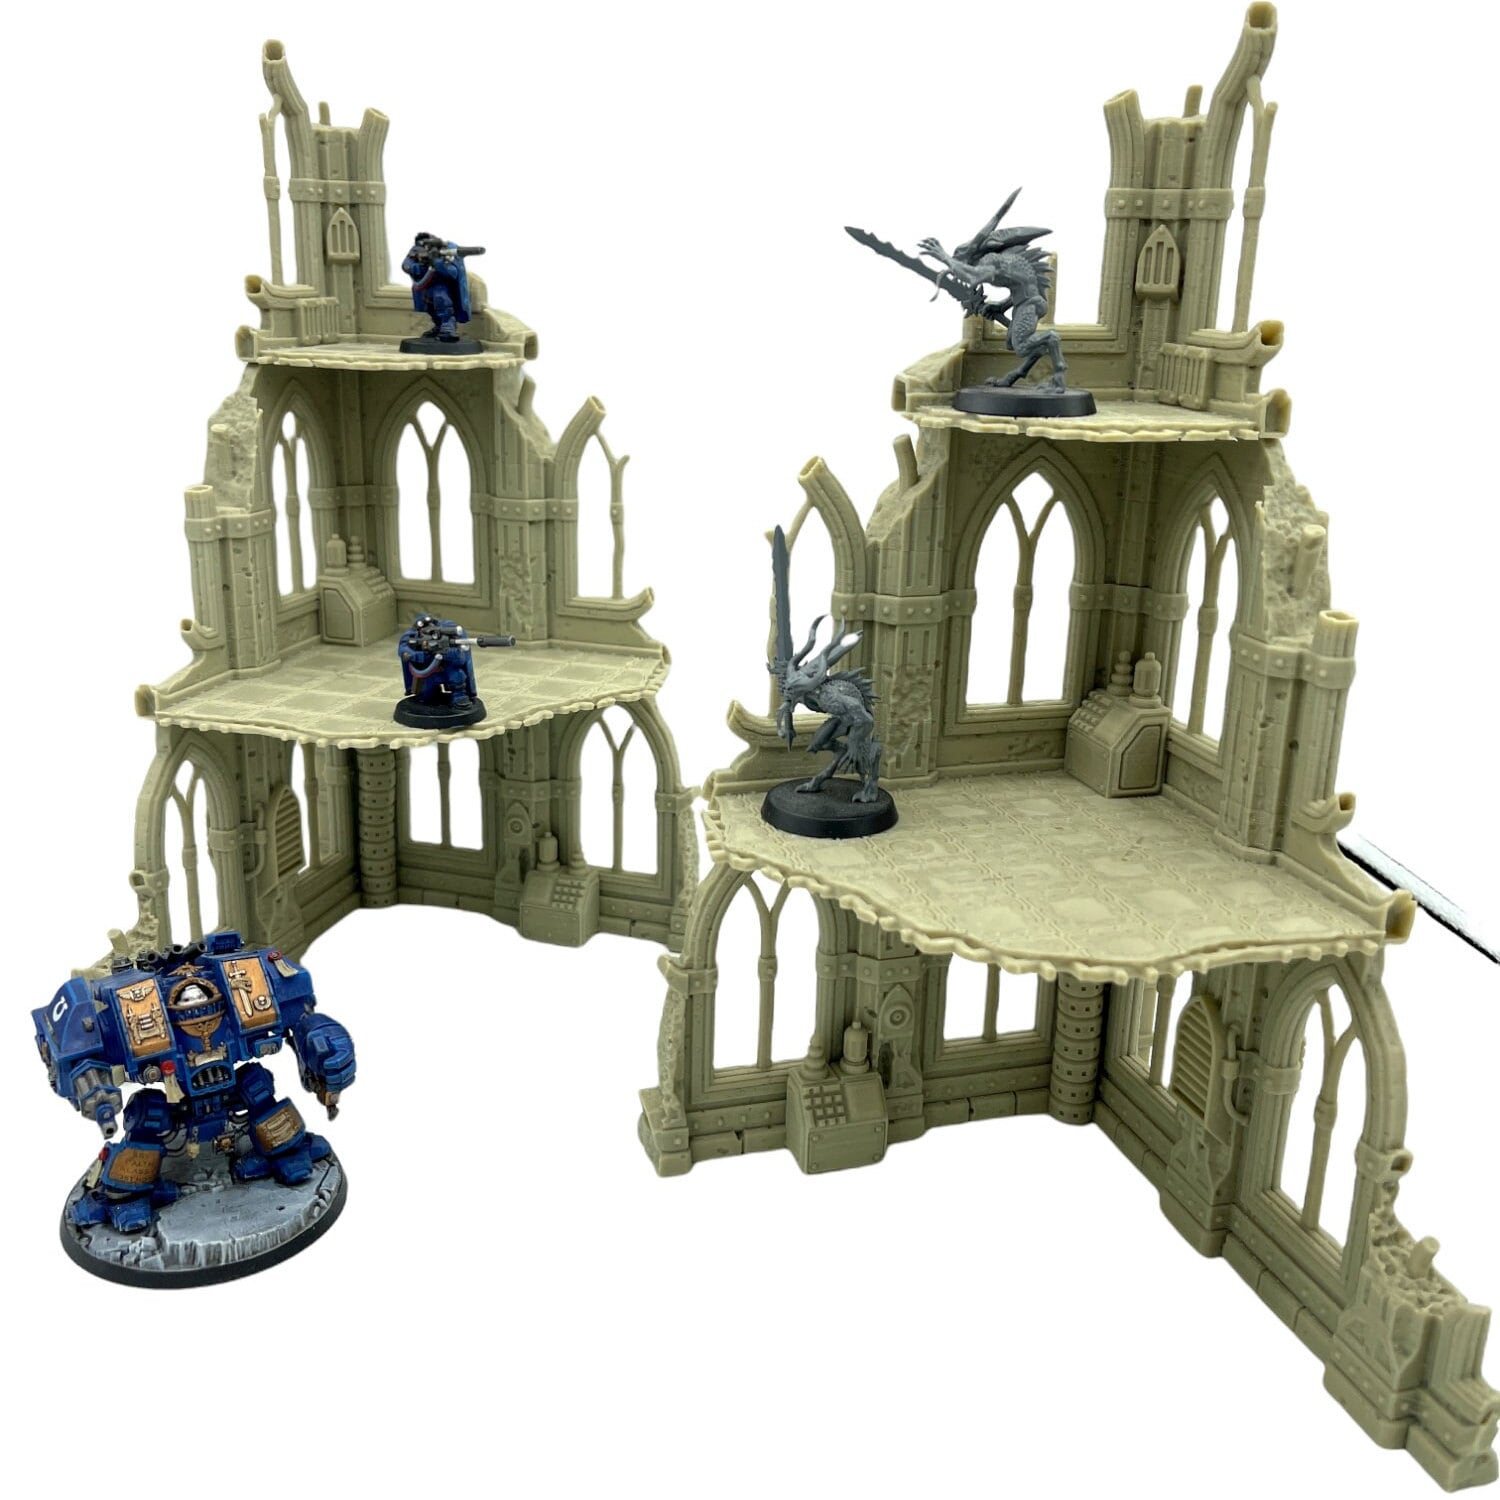 Grim Dark Ruins Set 1 / Terrain 4 Print / RPG and Wargame 3d Printed Tabletop Terrain / Licensed Printer